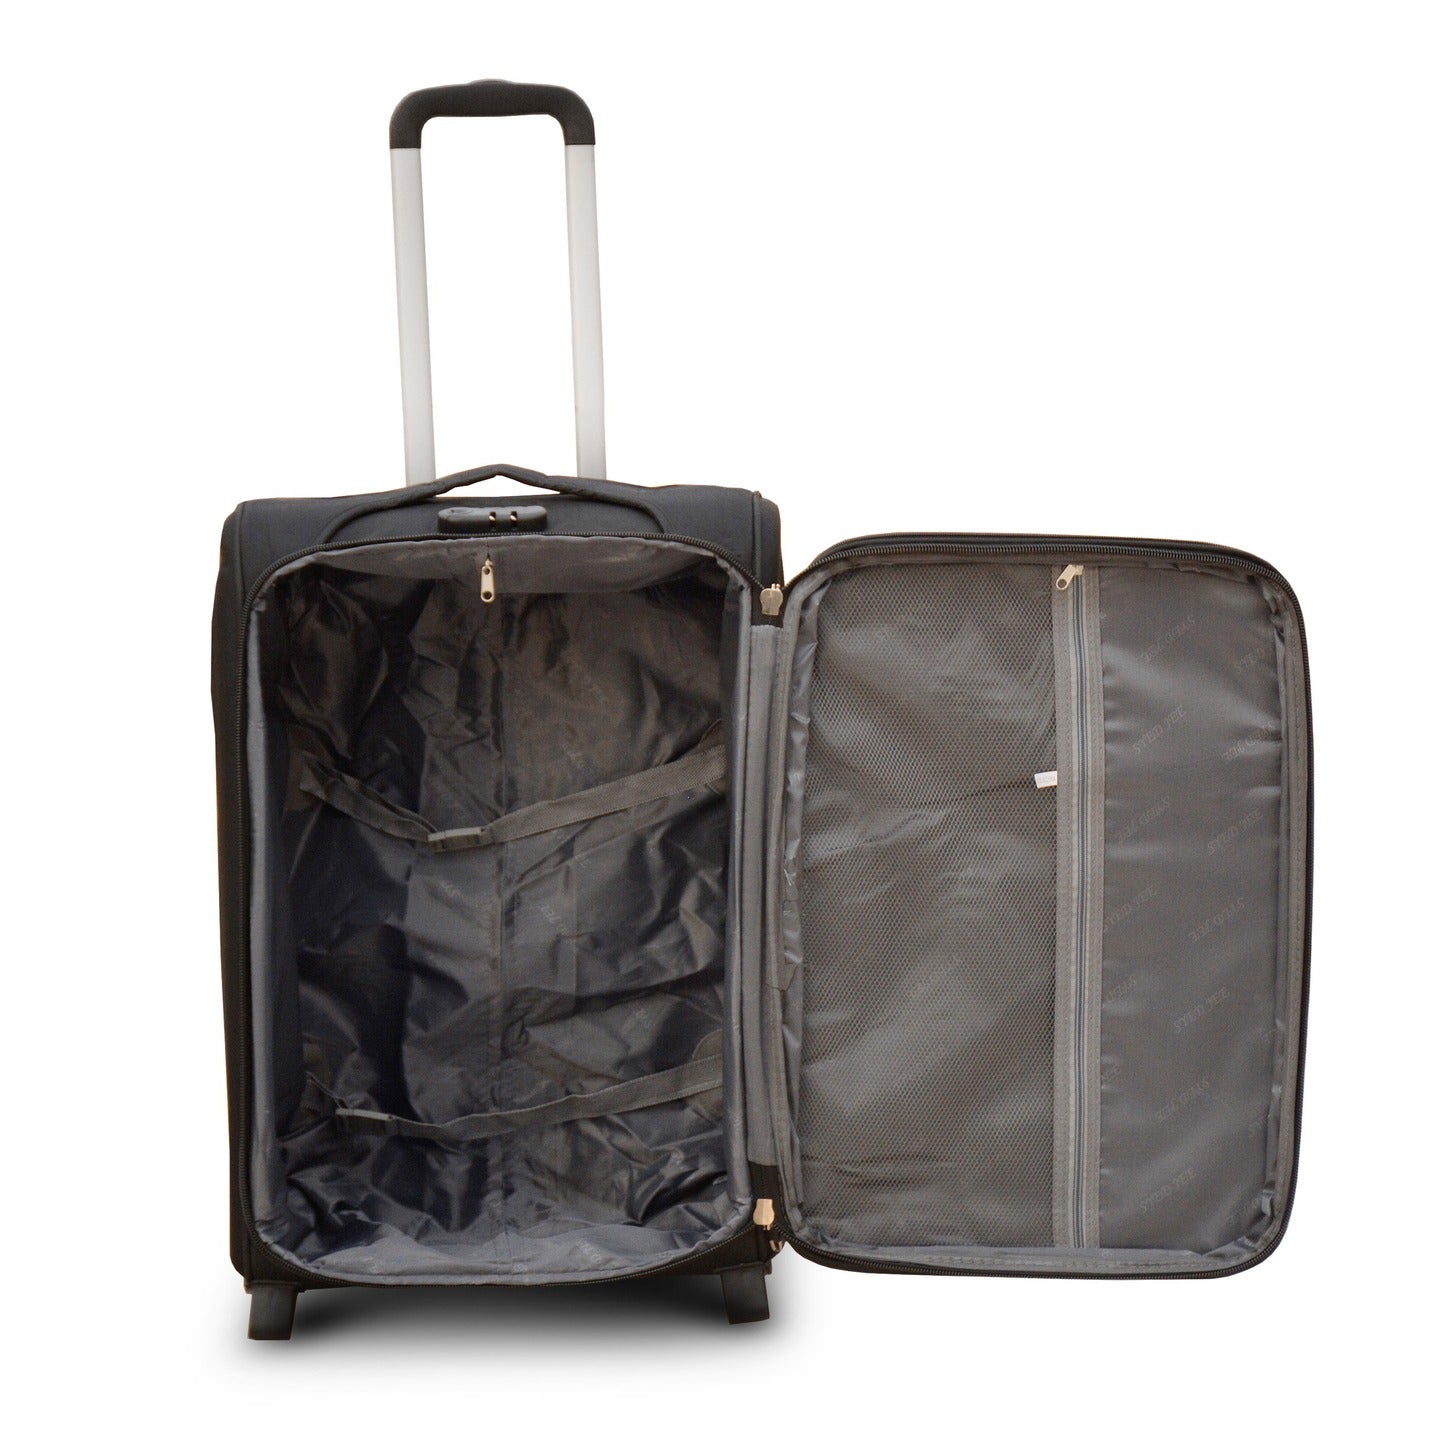 32" Black Colour SJ JIAN 2 Wheel Luggage Lightweight Soft Material Trolley Bag Zaappy.com